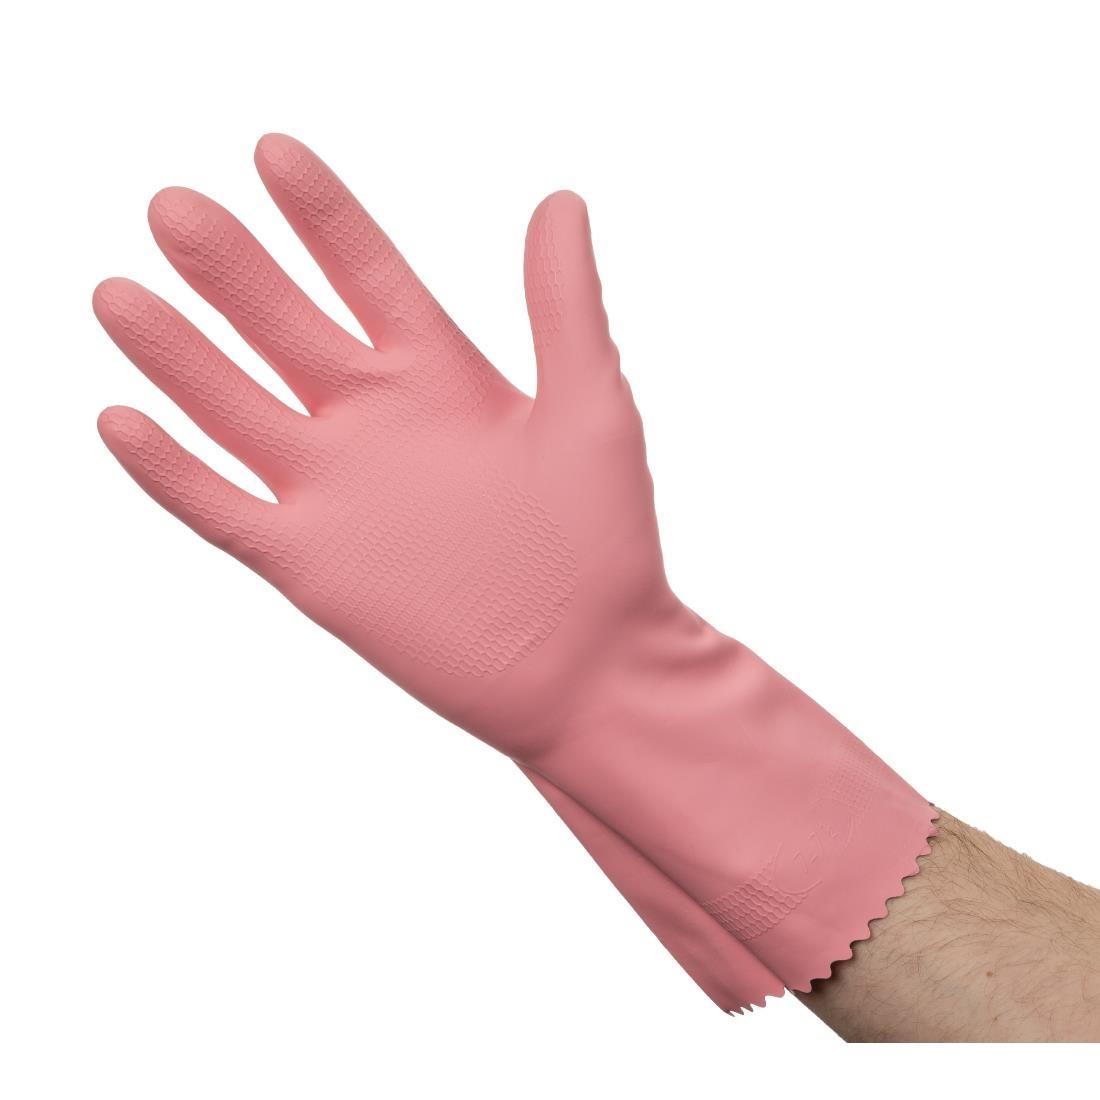 Jantex Latex Household Gloves Pink Medium - CD794-M  - 1